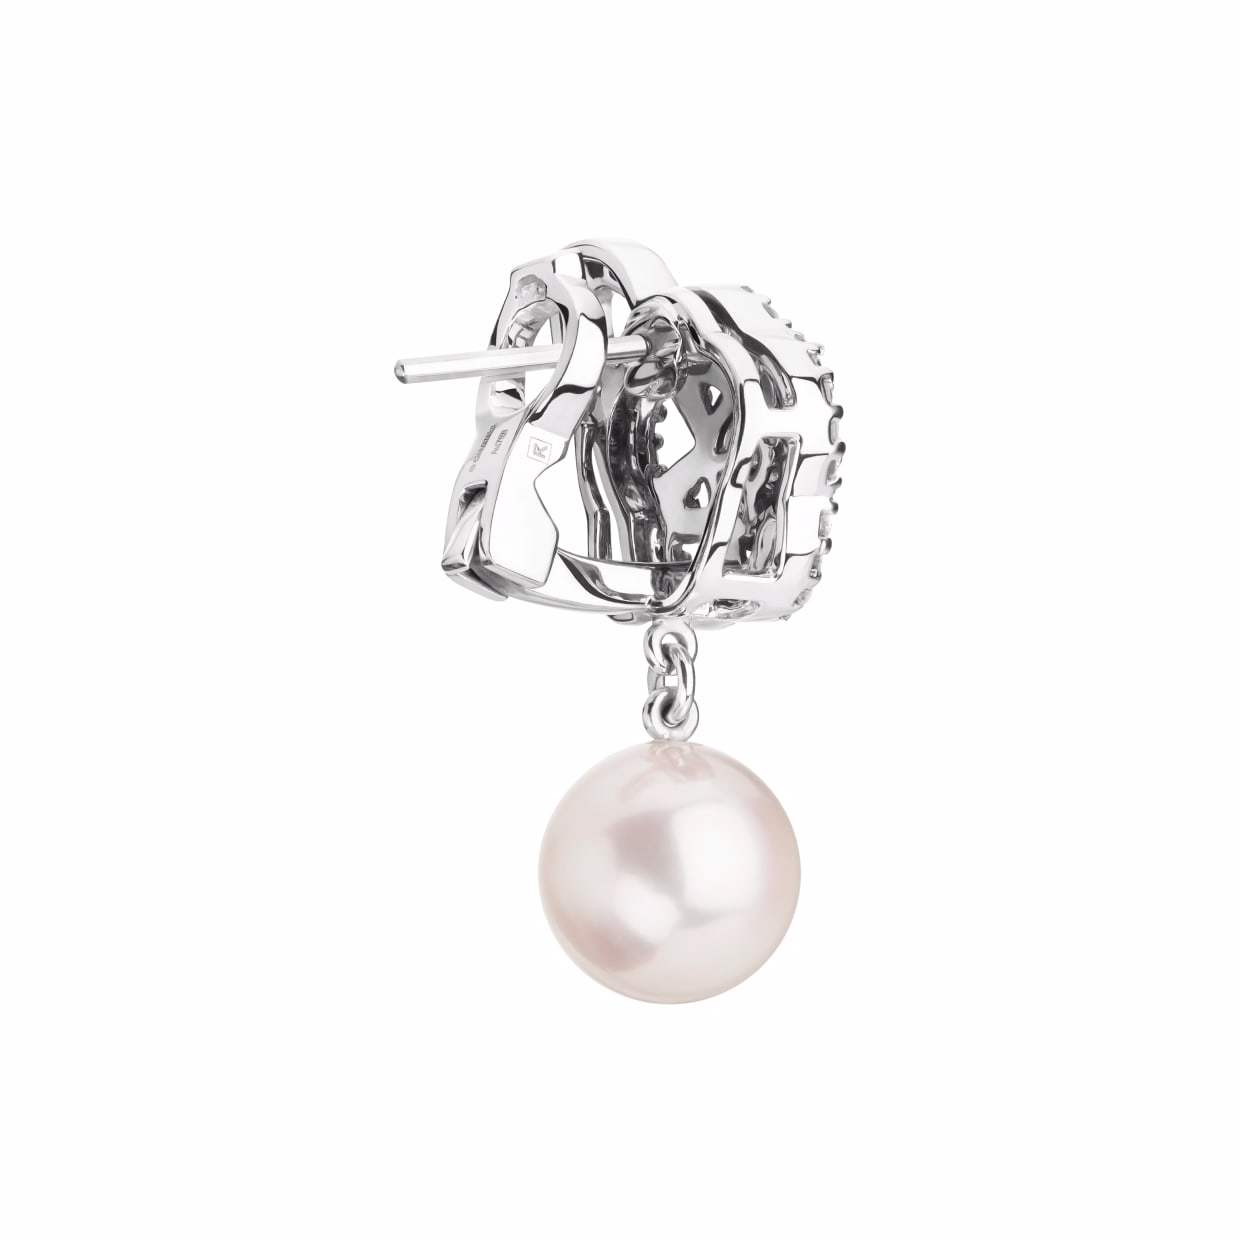 Custom design jewelry earrings in 18K white gold plating silver jewelry OEM/ODM Jewelry